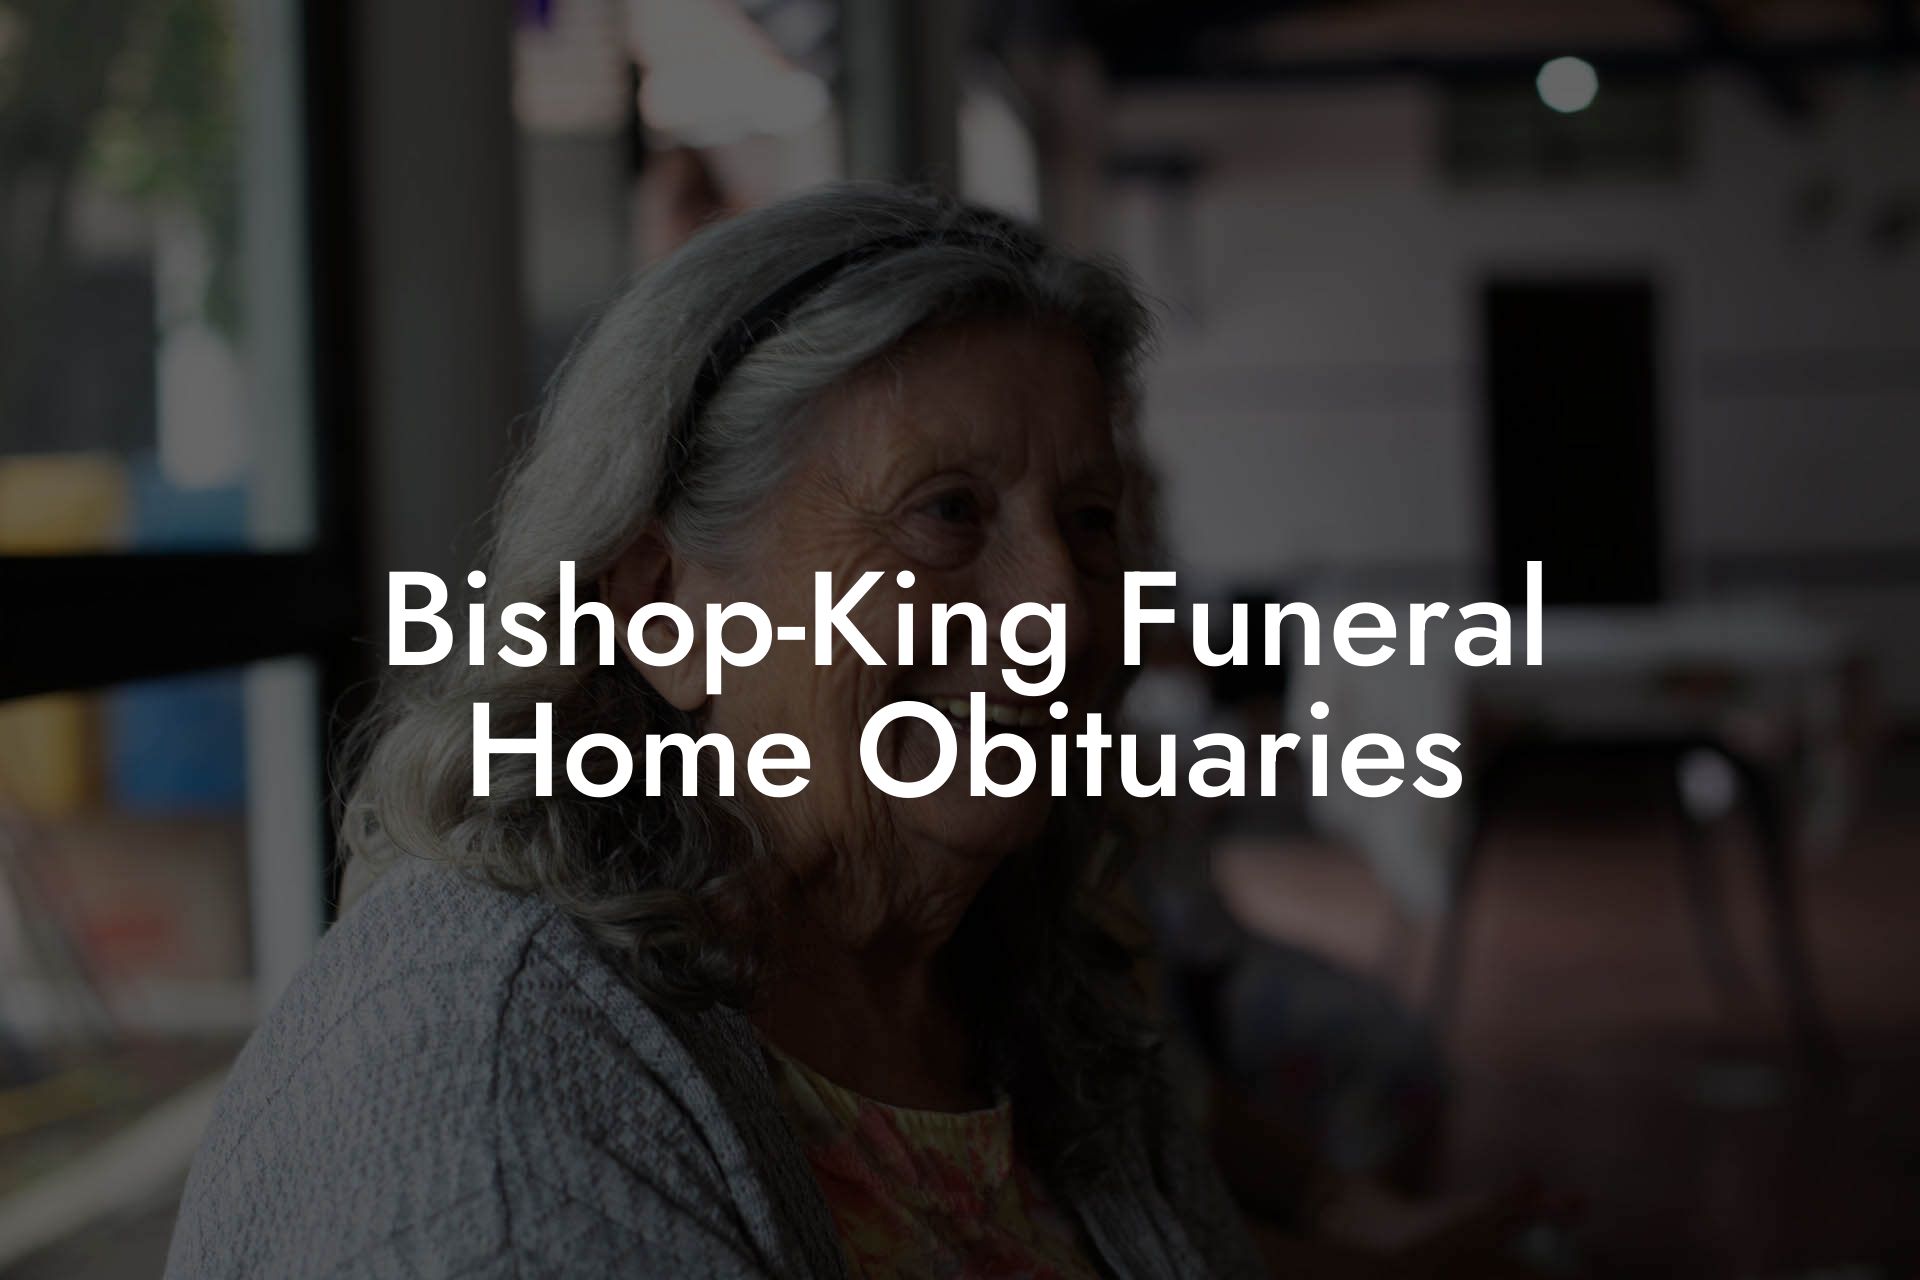 Bishop-King Funeral Home Obituaries